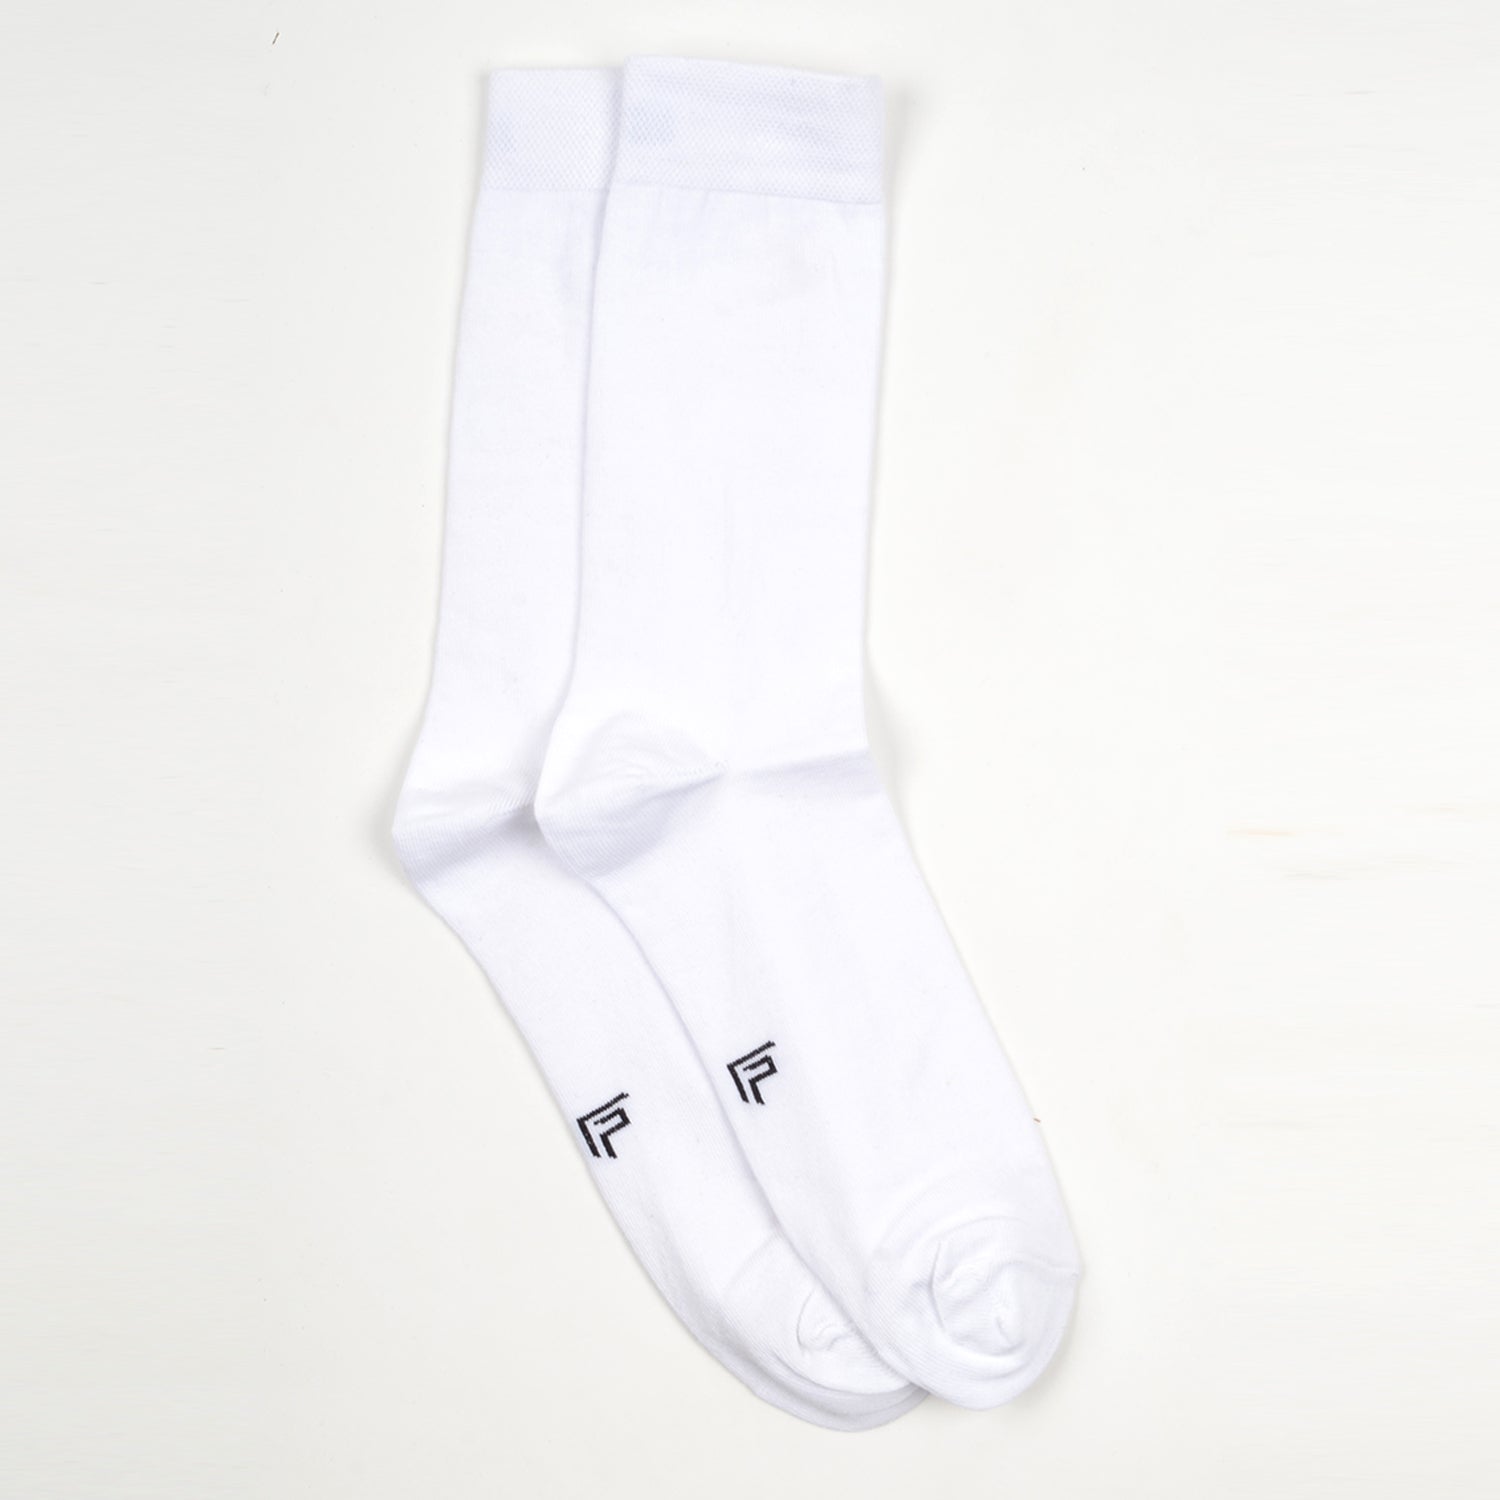 Footprints Men's Formal Organic Cotton & Bamboo Odour free Socks | Pack of 4